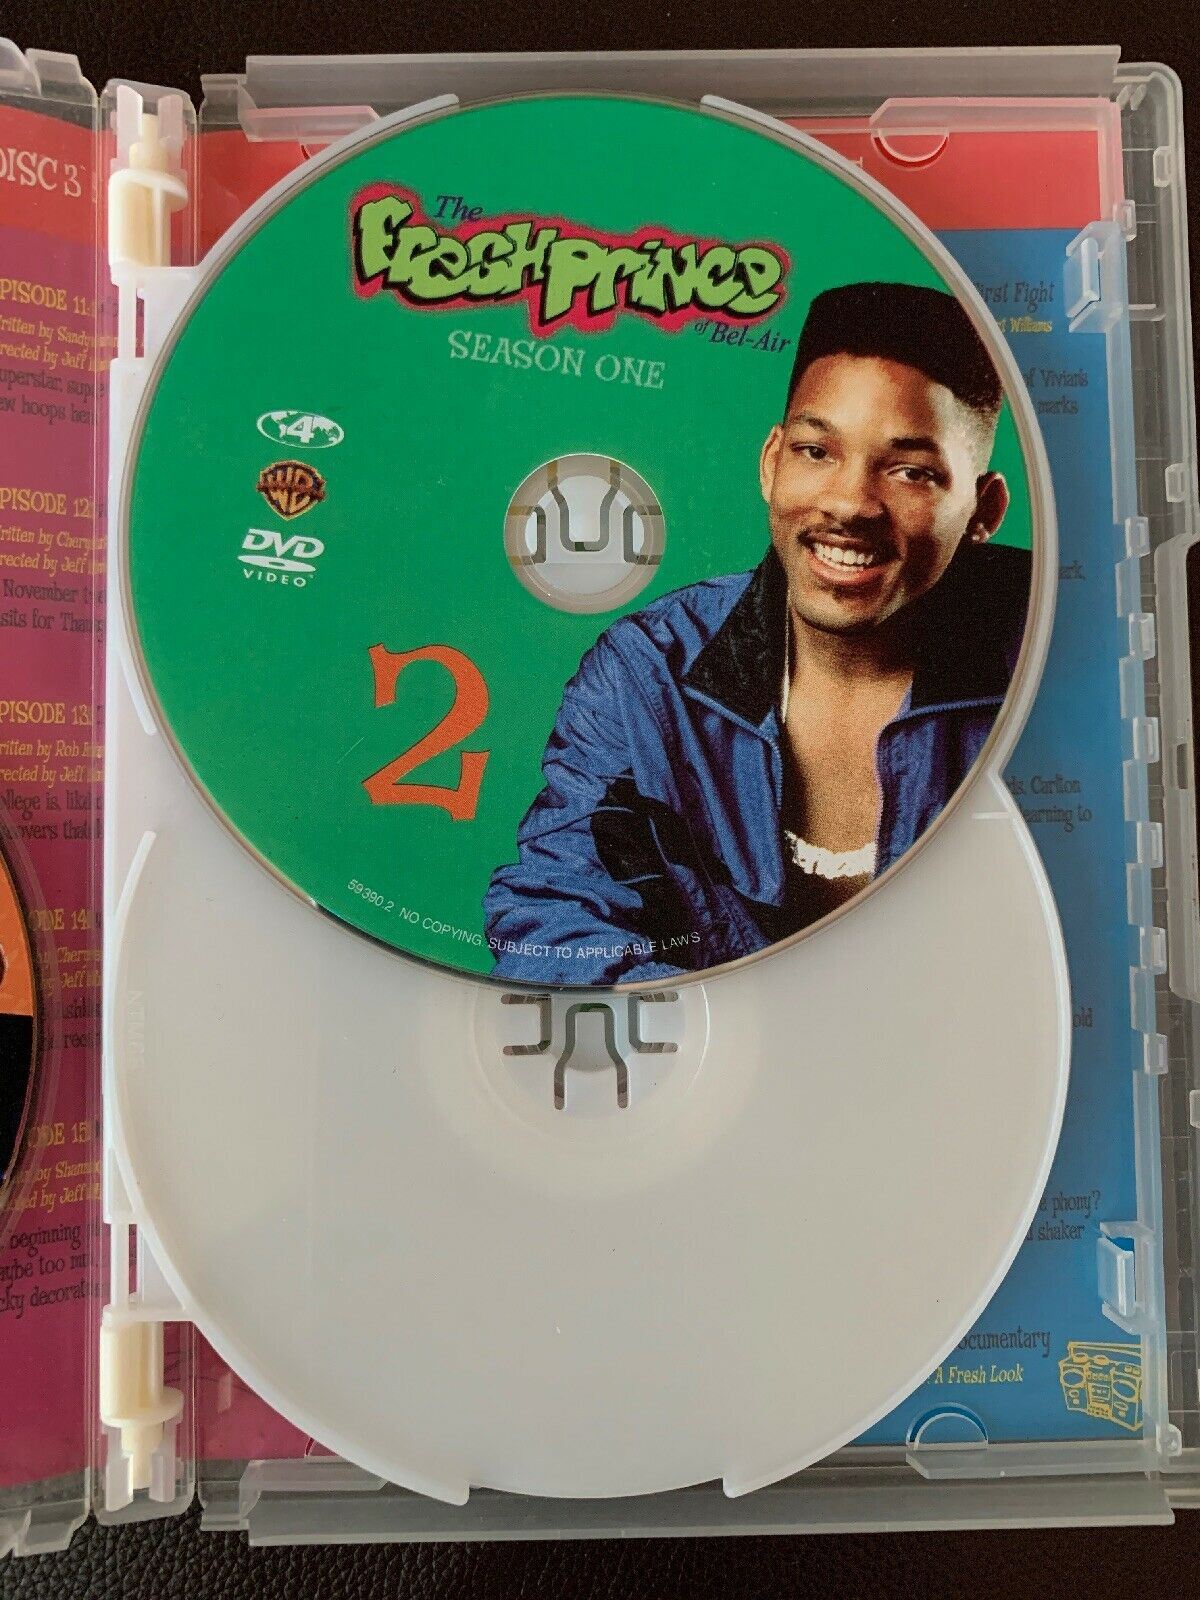 Fresh Prince Of Bel Air : Season 1 (DVD, 2005, 5-Disc Set)